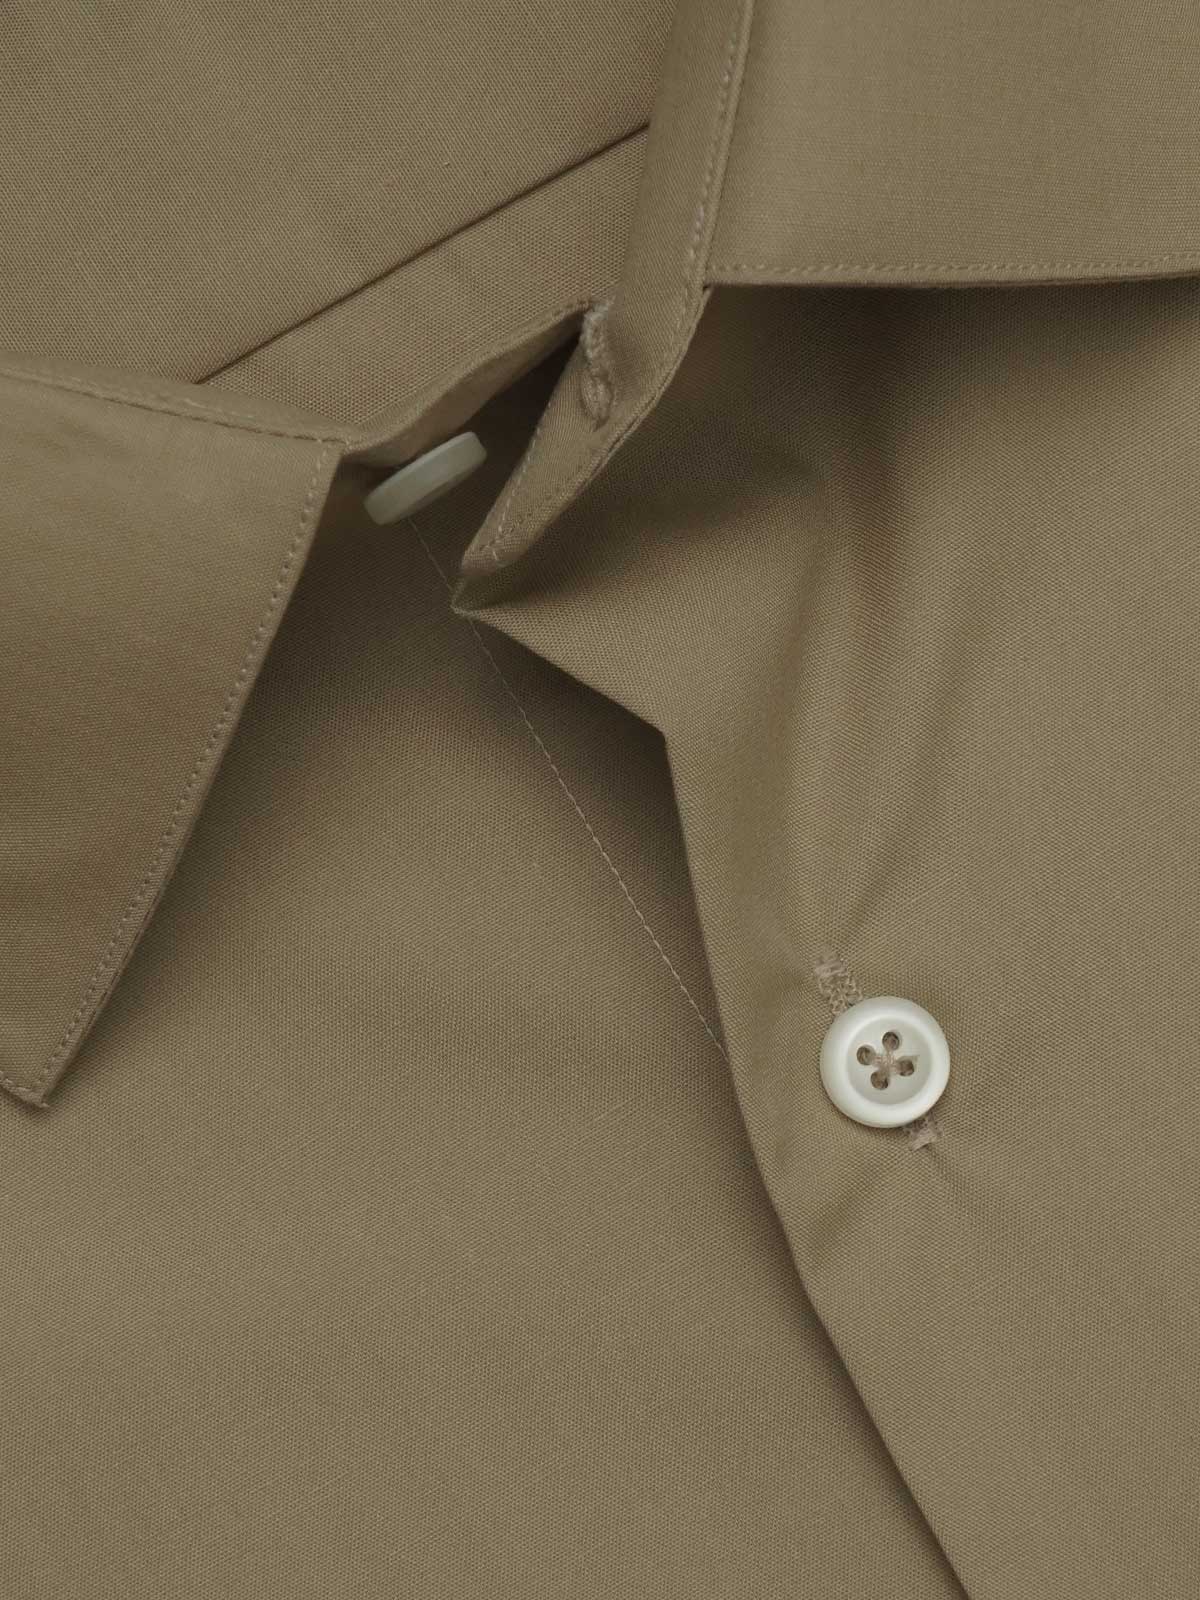 Fawn Plain, Elite Edition, French Collar Men’s Formal Shirt (FS-487)